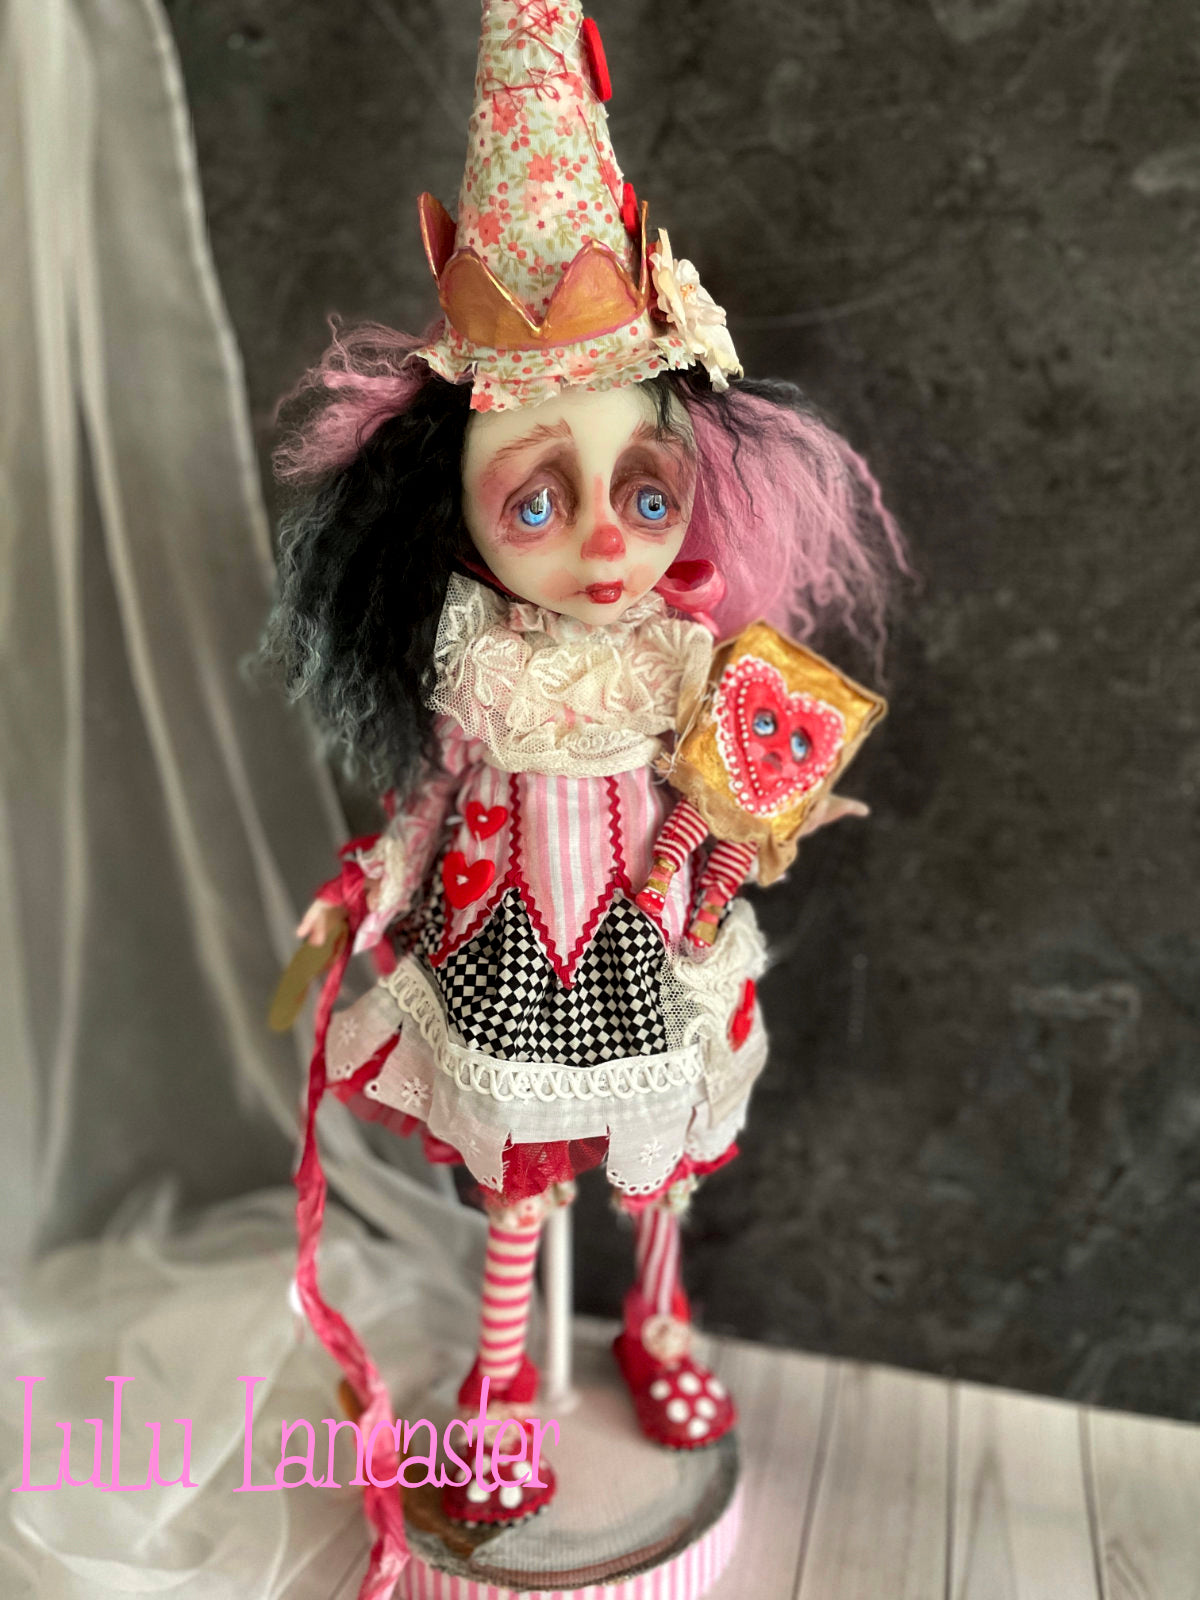 Verity Valentine Poupee sad clown Original LuLu Lancaster Art Doll